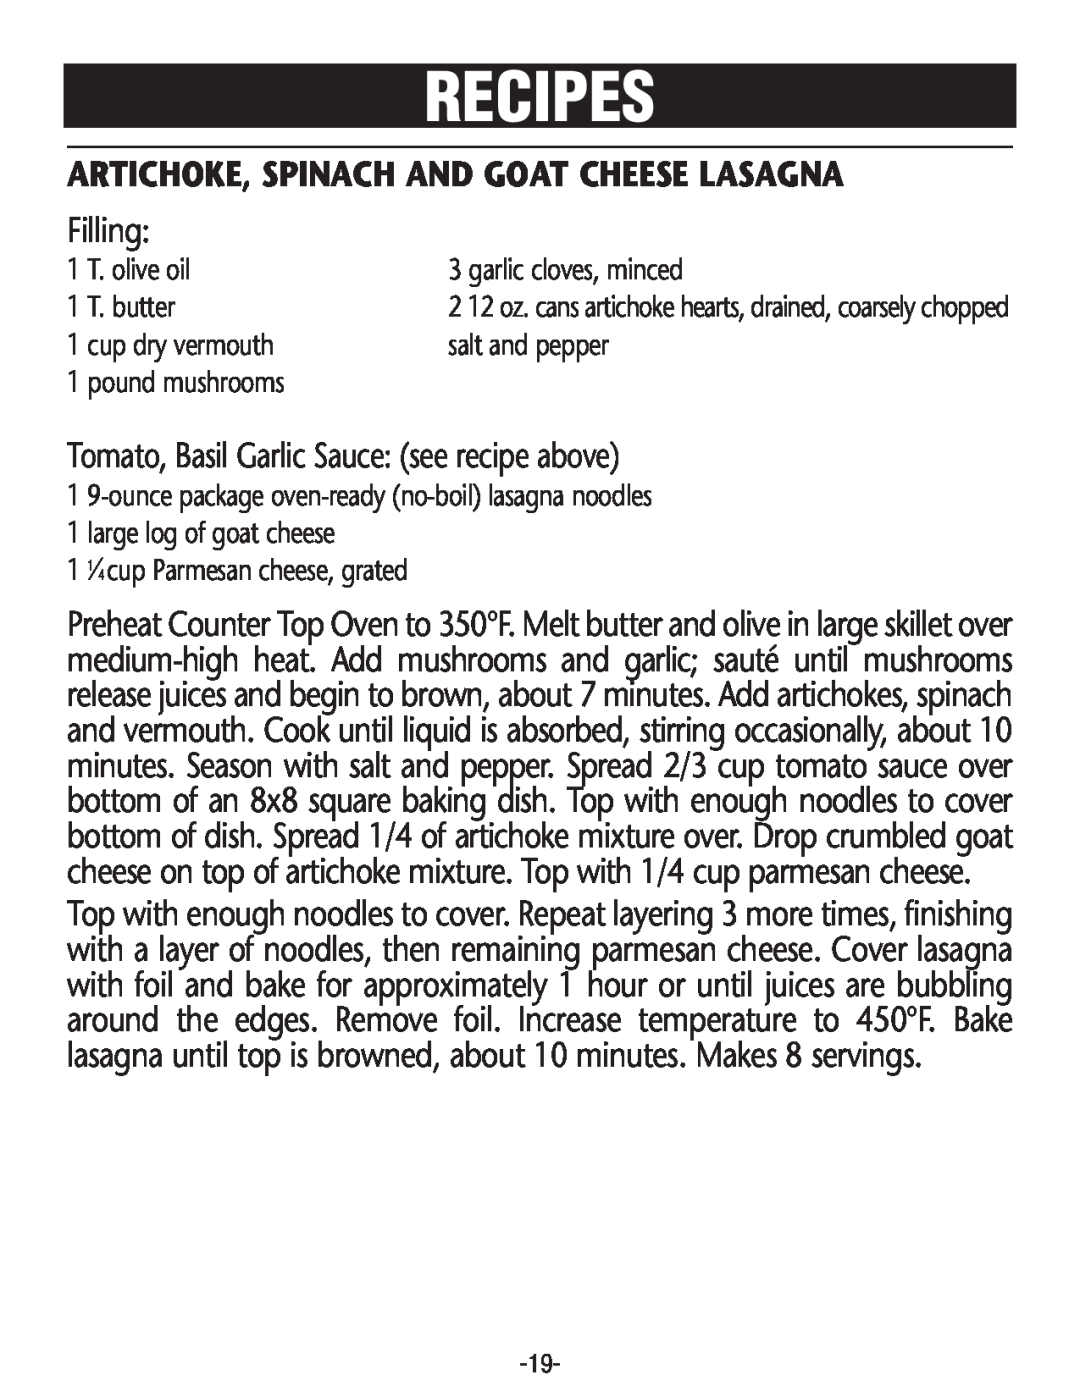 Rival CO606 manual Artichoke, Spinach And Goat Cheese Lasagna, Recipes, Filling, Tomato,Basil Garlic Sauce see recipe above 